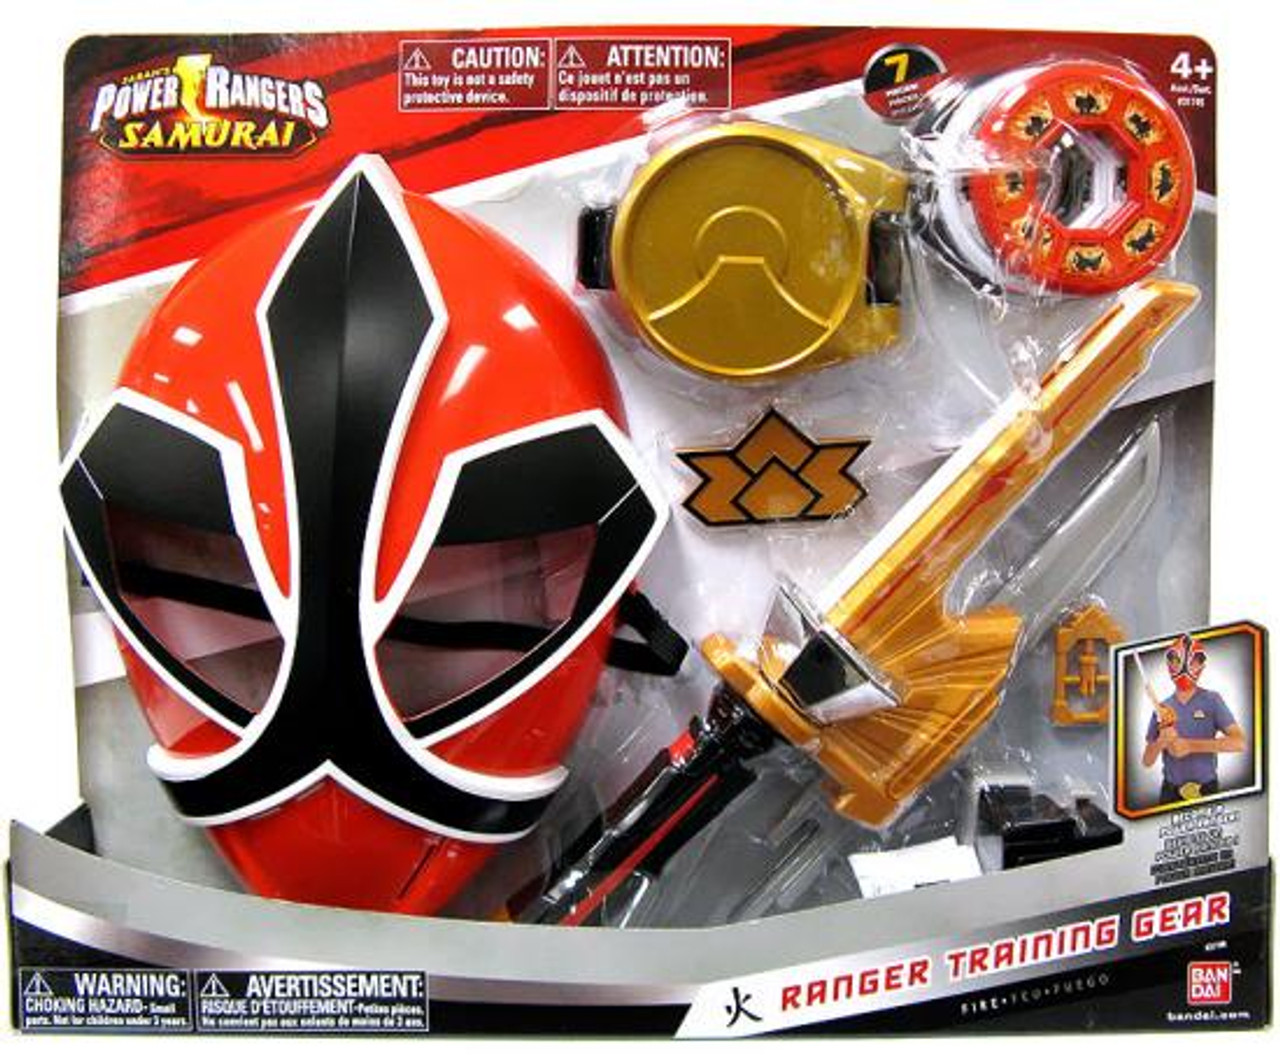 Power Rangers Samurai Ranger Training Gear Roleplay Toy